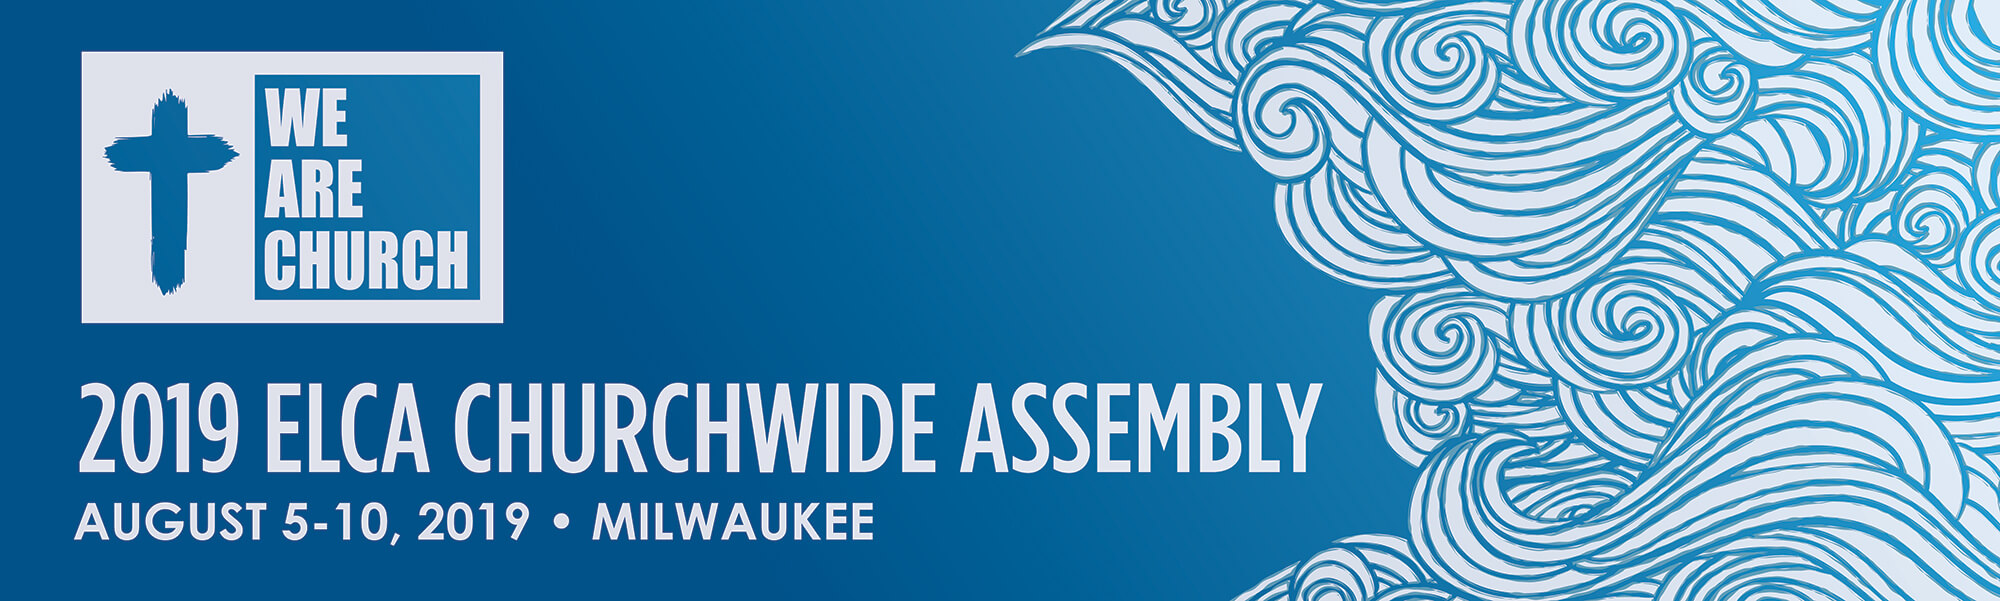 elca-churchwide-assembly